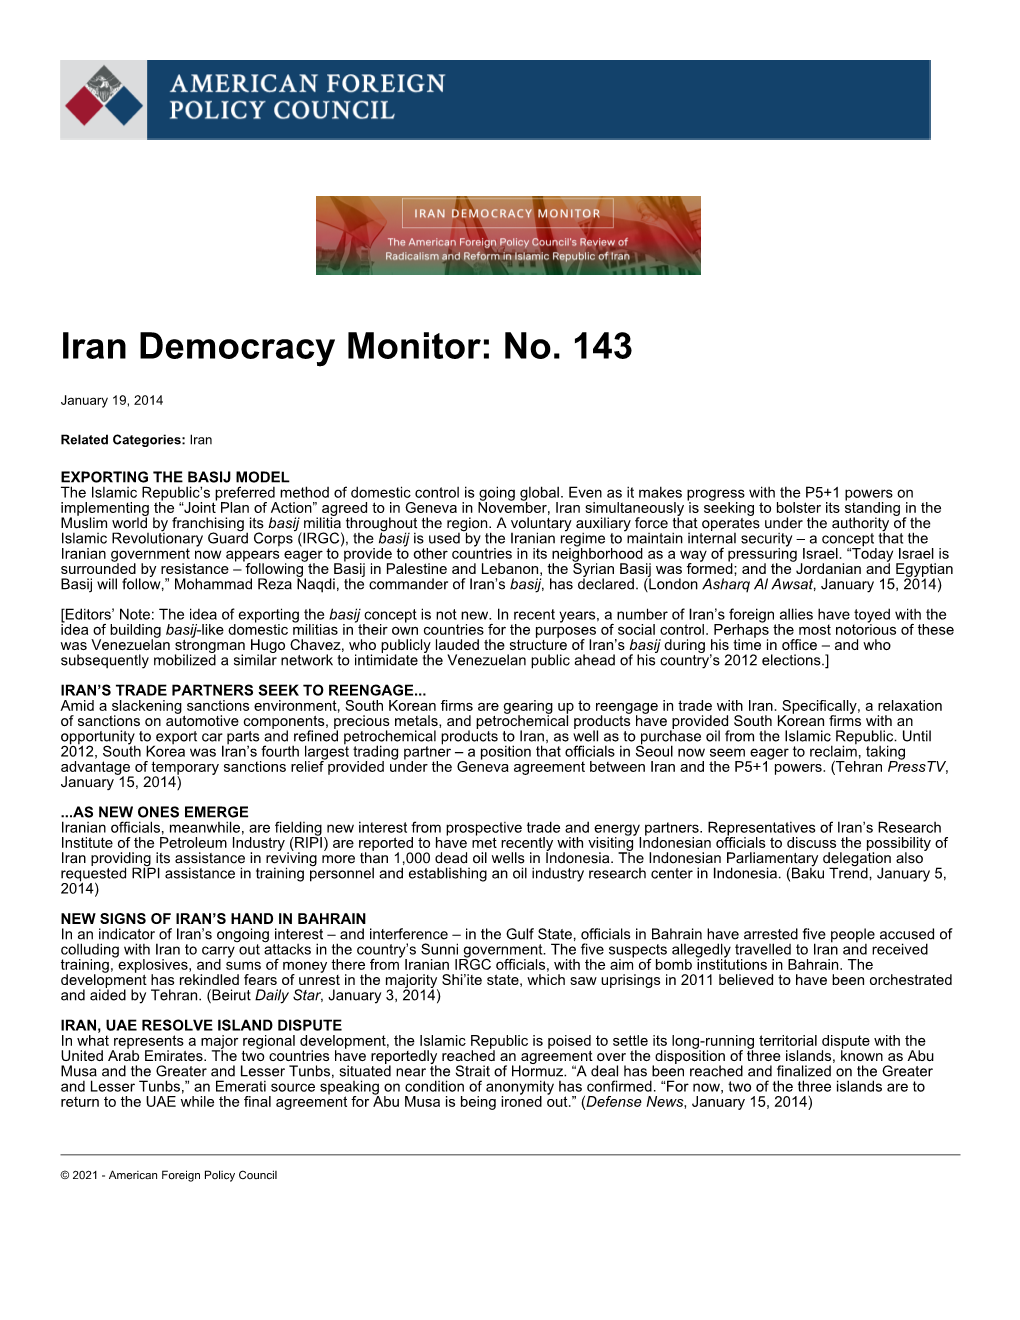 Iran Democracy Monitor: No. 143 | American Foreign Policy Council